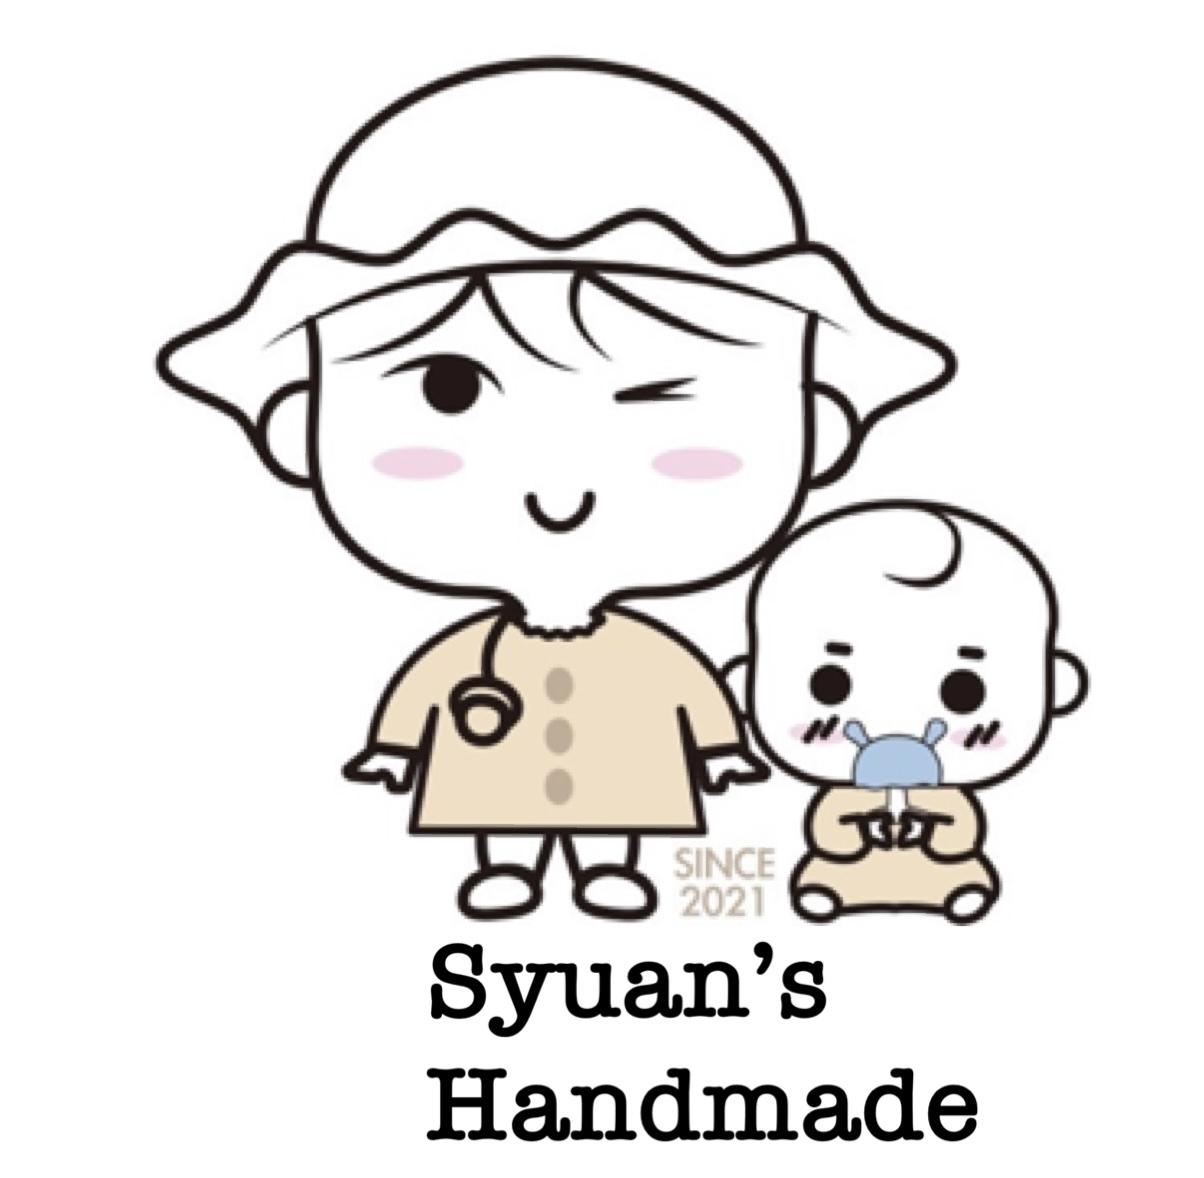 Syuan’s Handmade